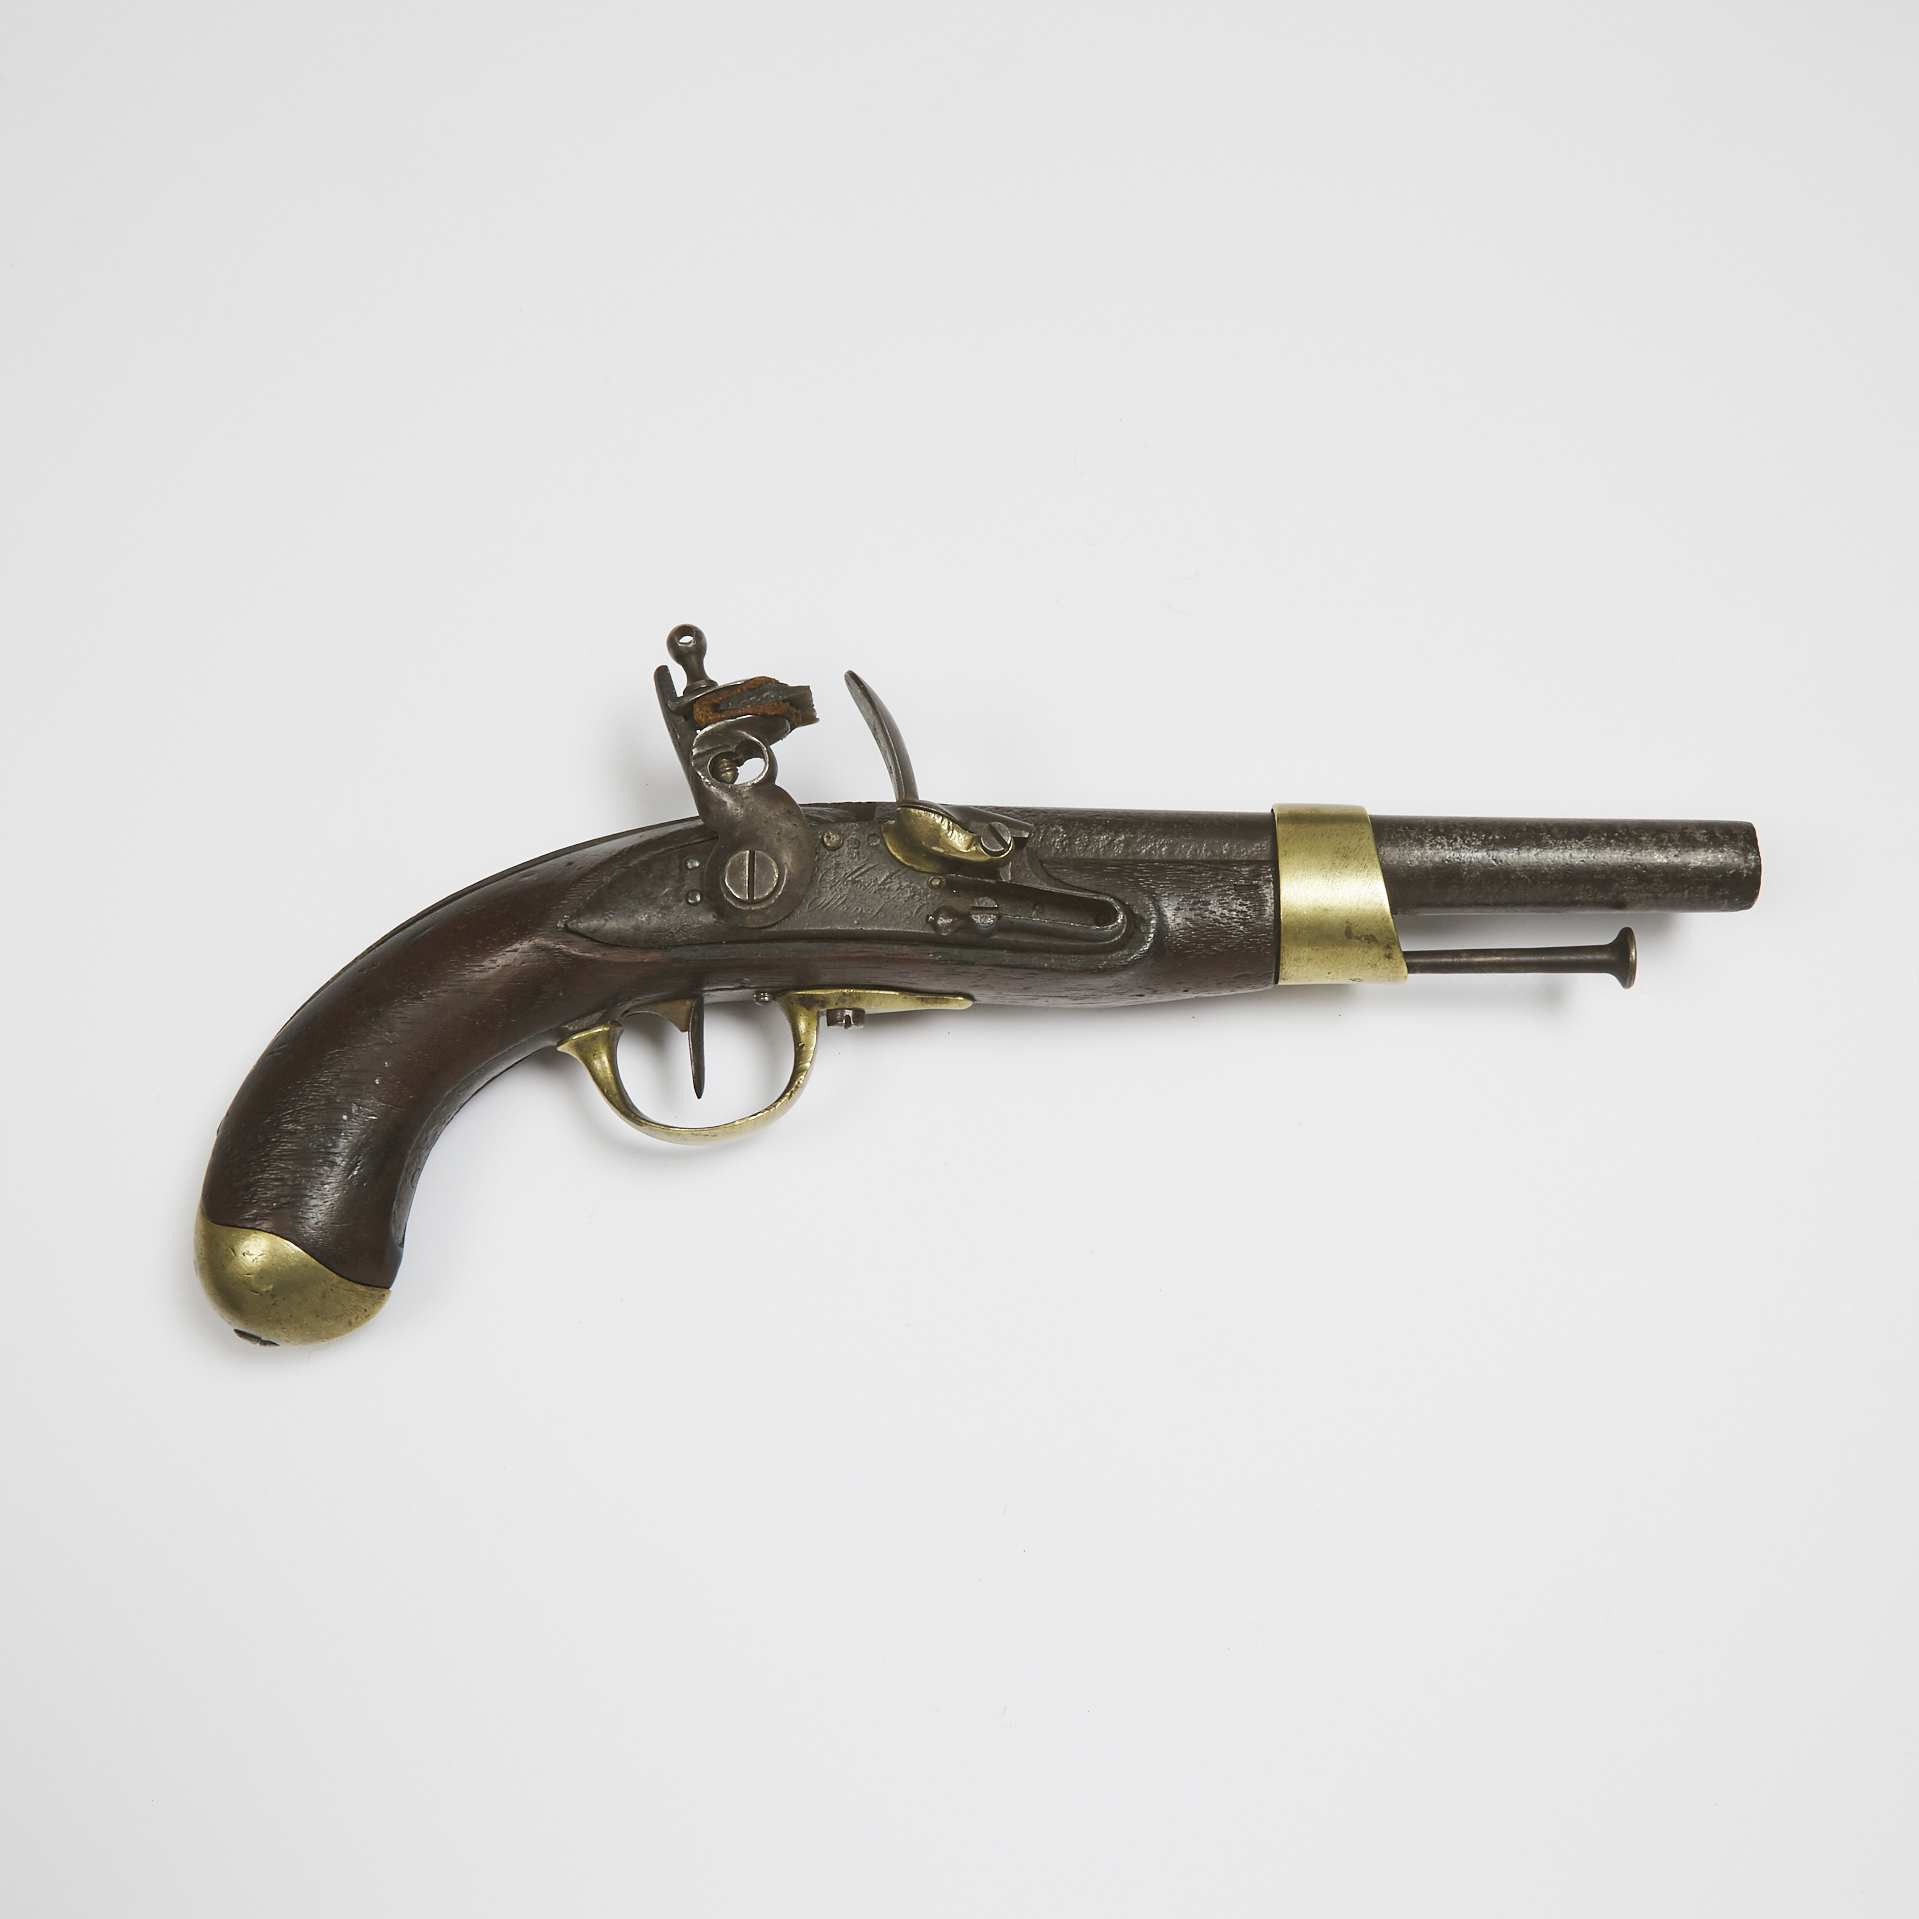 French Model 'An XIII' Cavalry Officer's Flintlock Holster Pistol, Maubeuge Arsenal, 1808